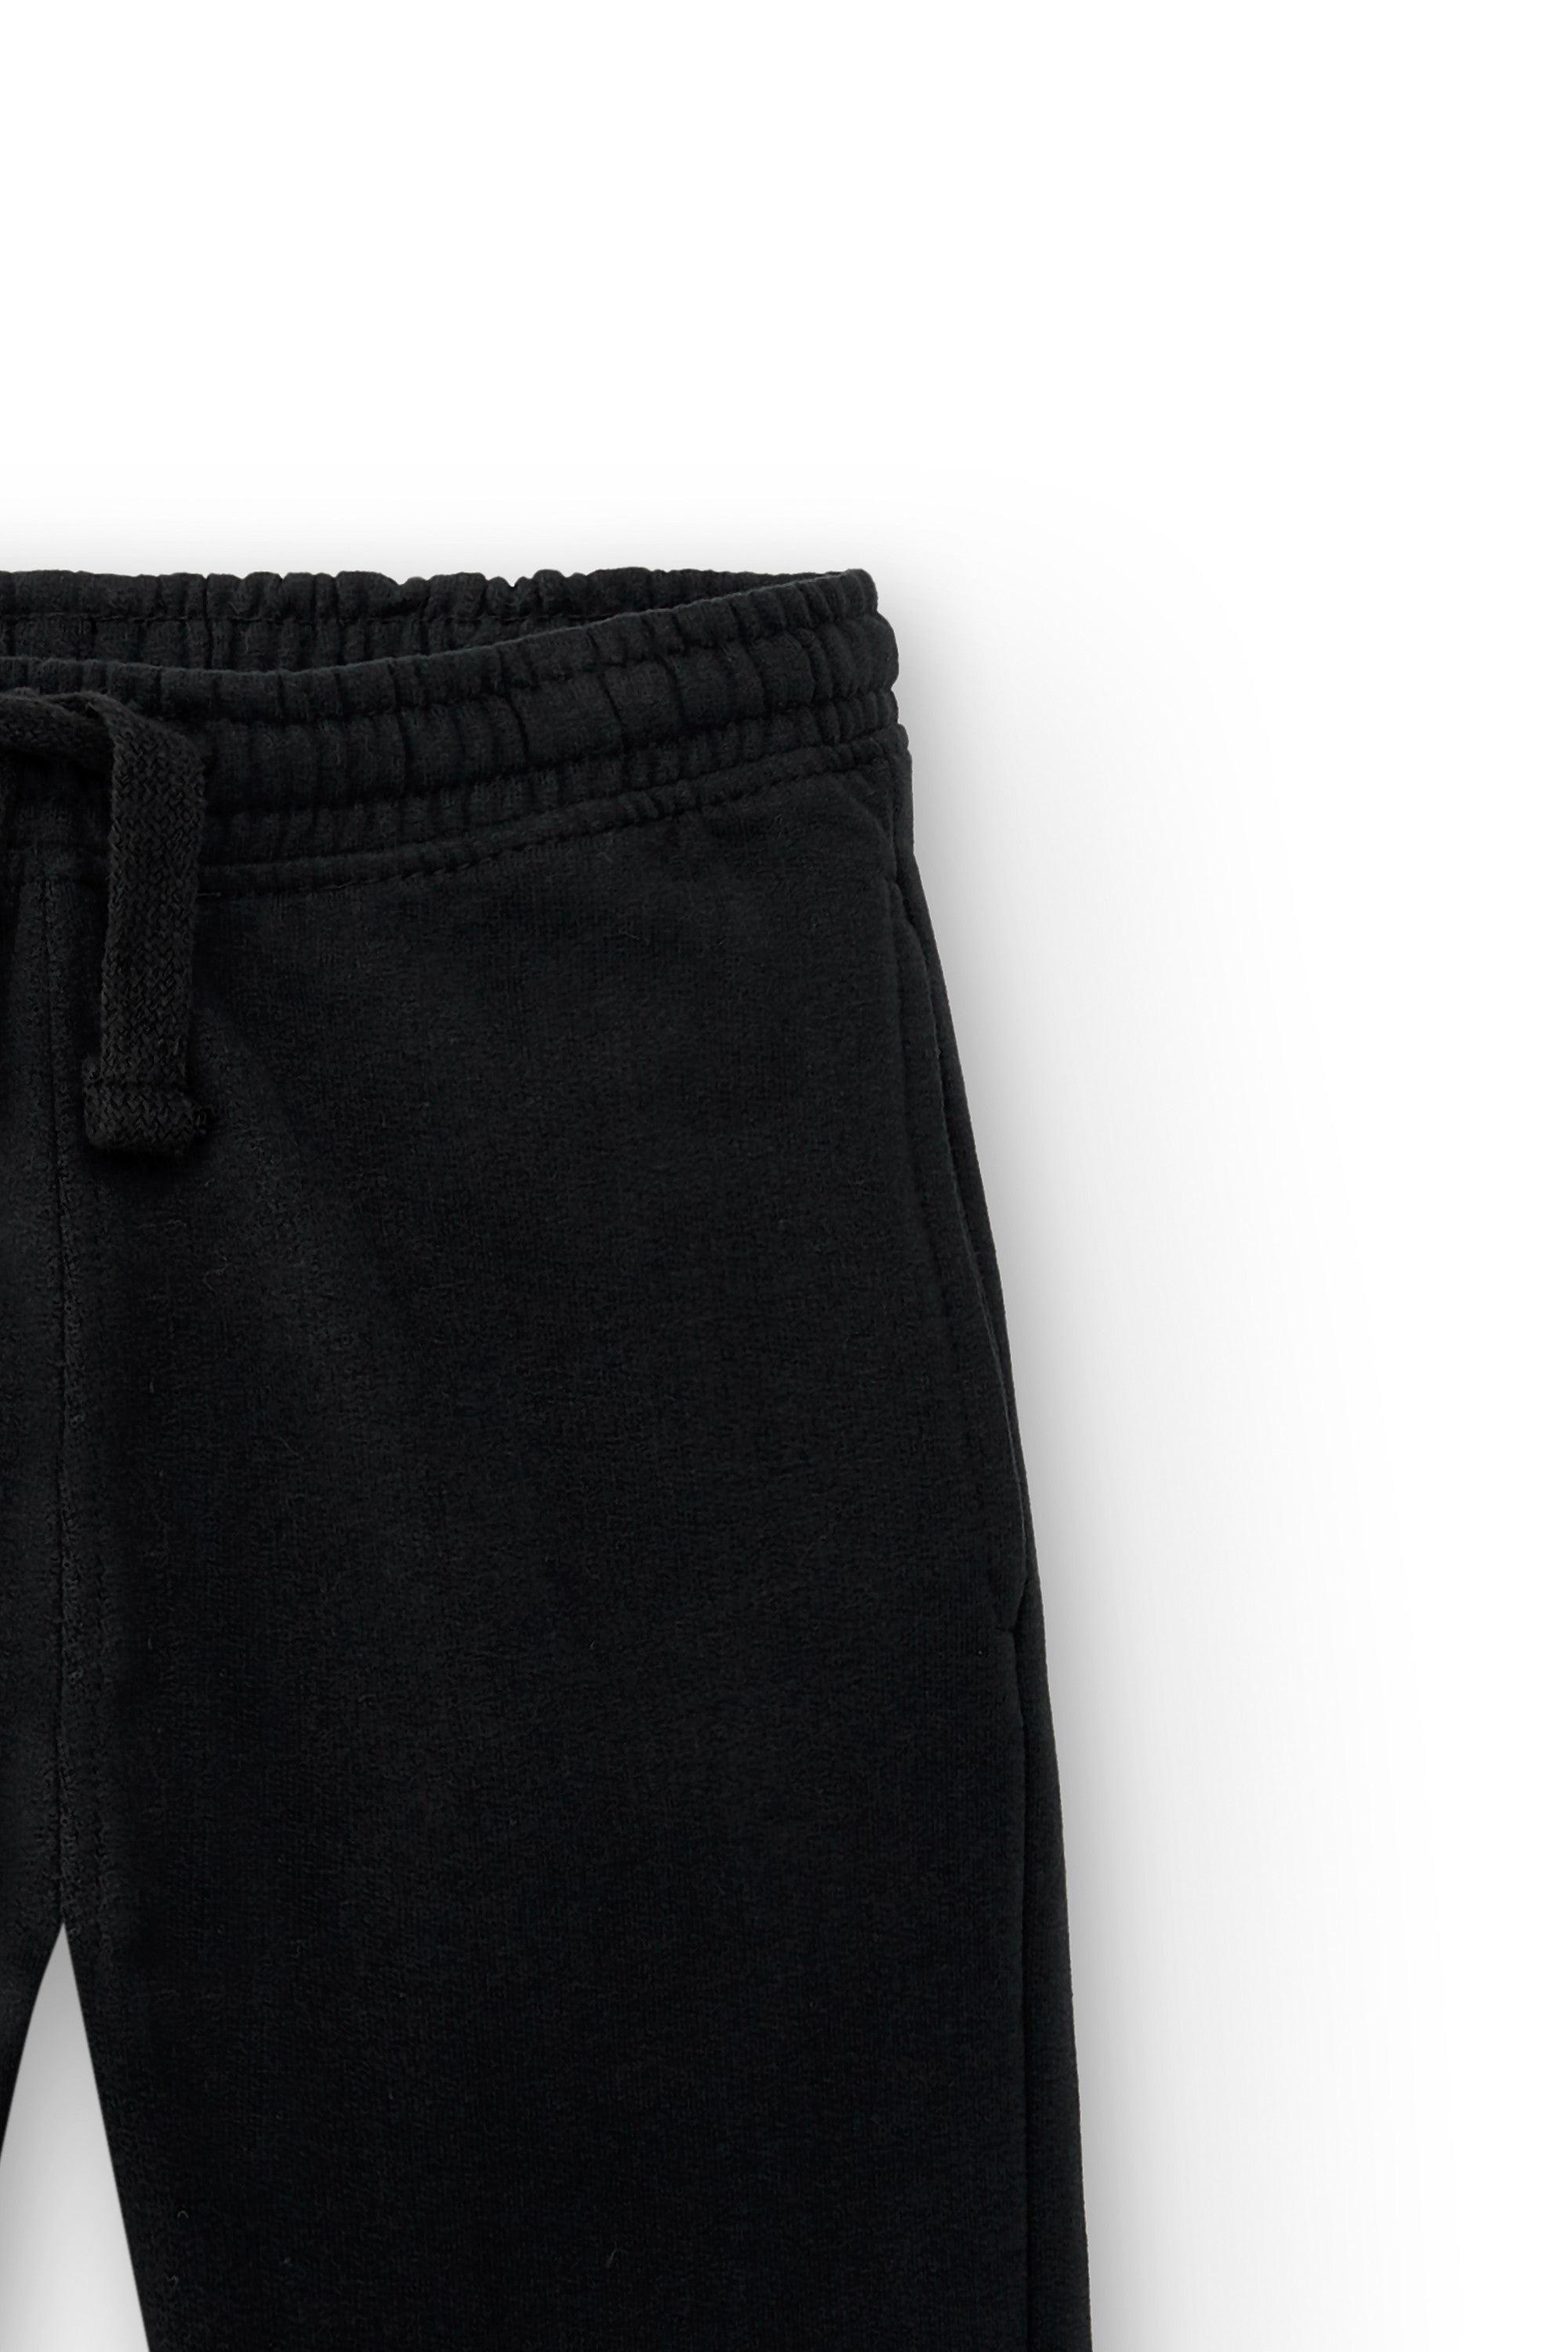 Boy's black sport pants – Charanga